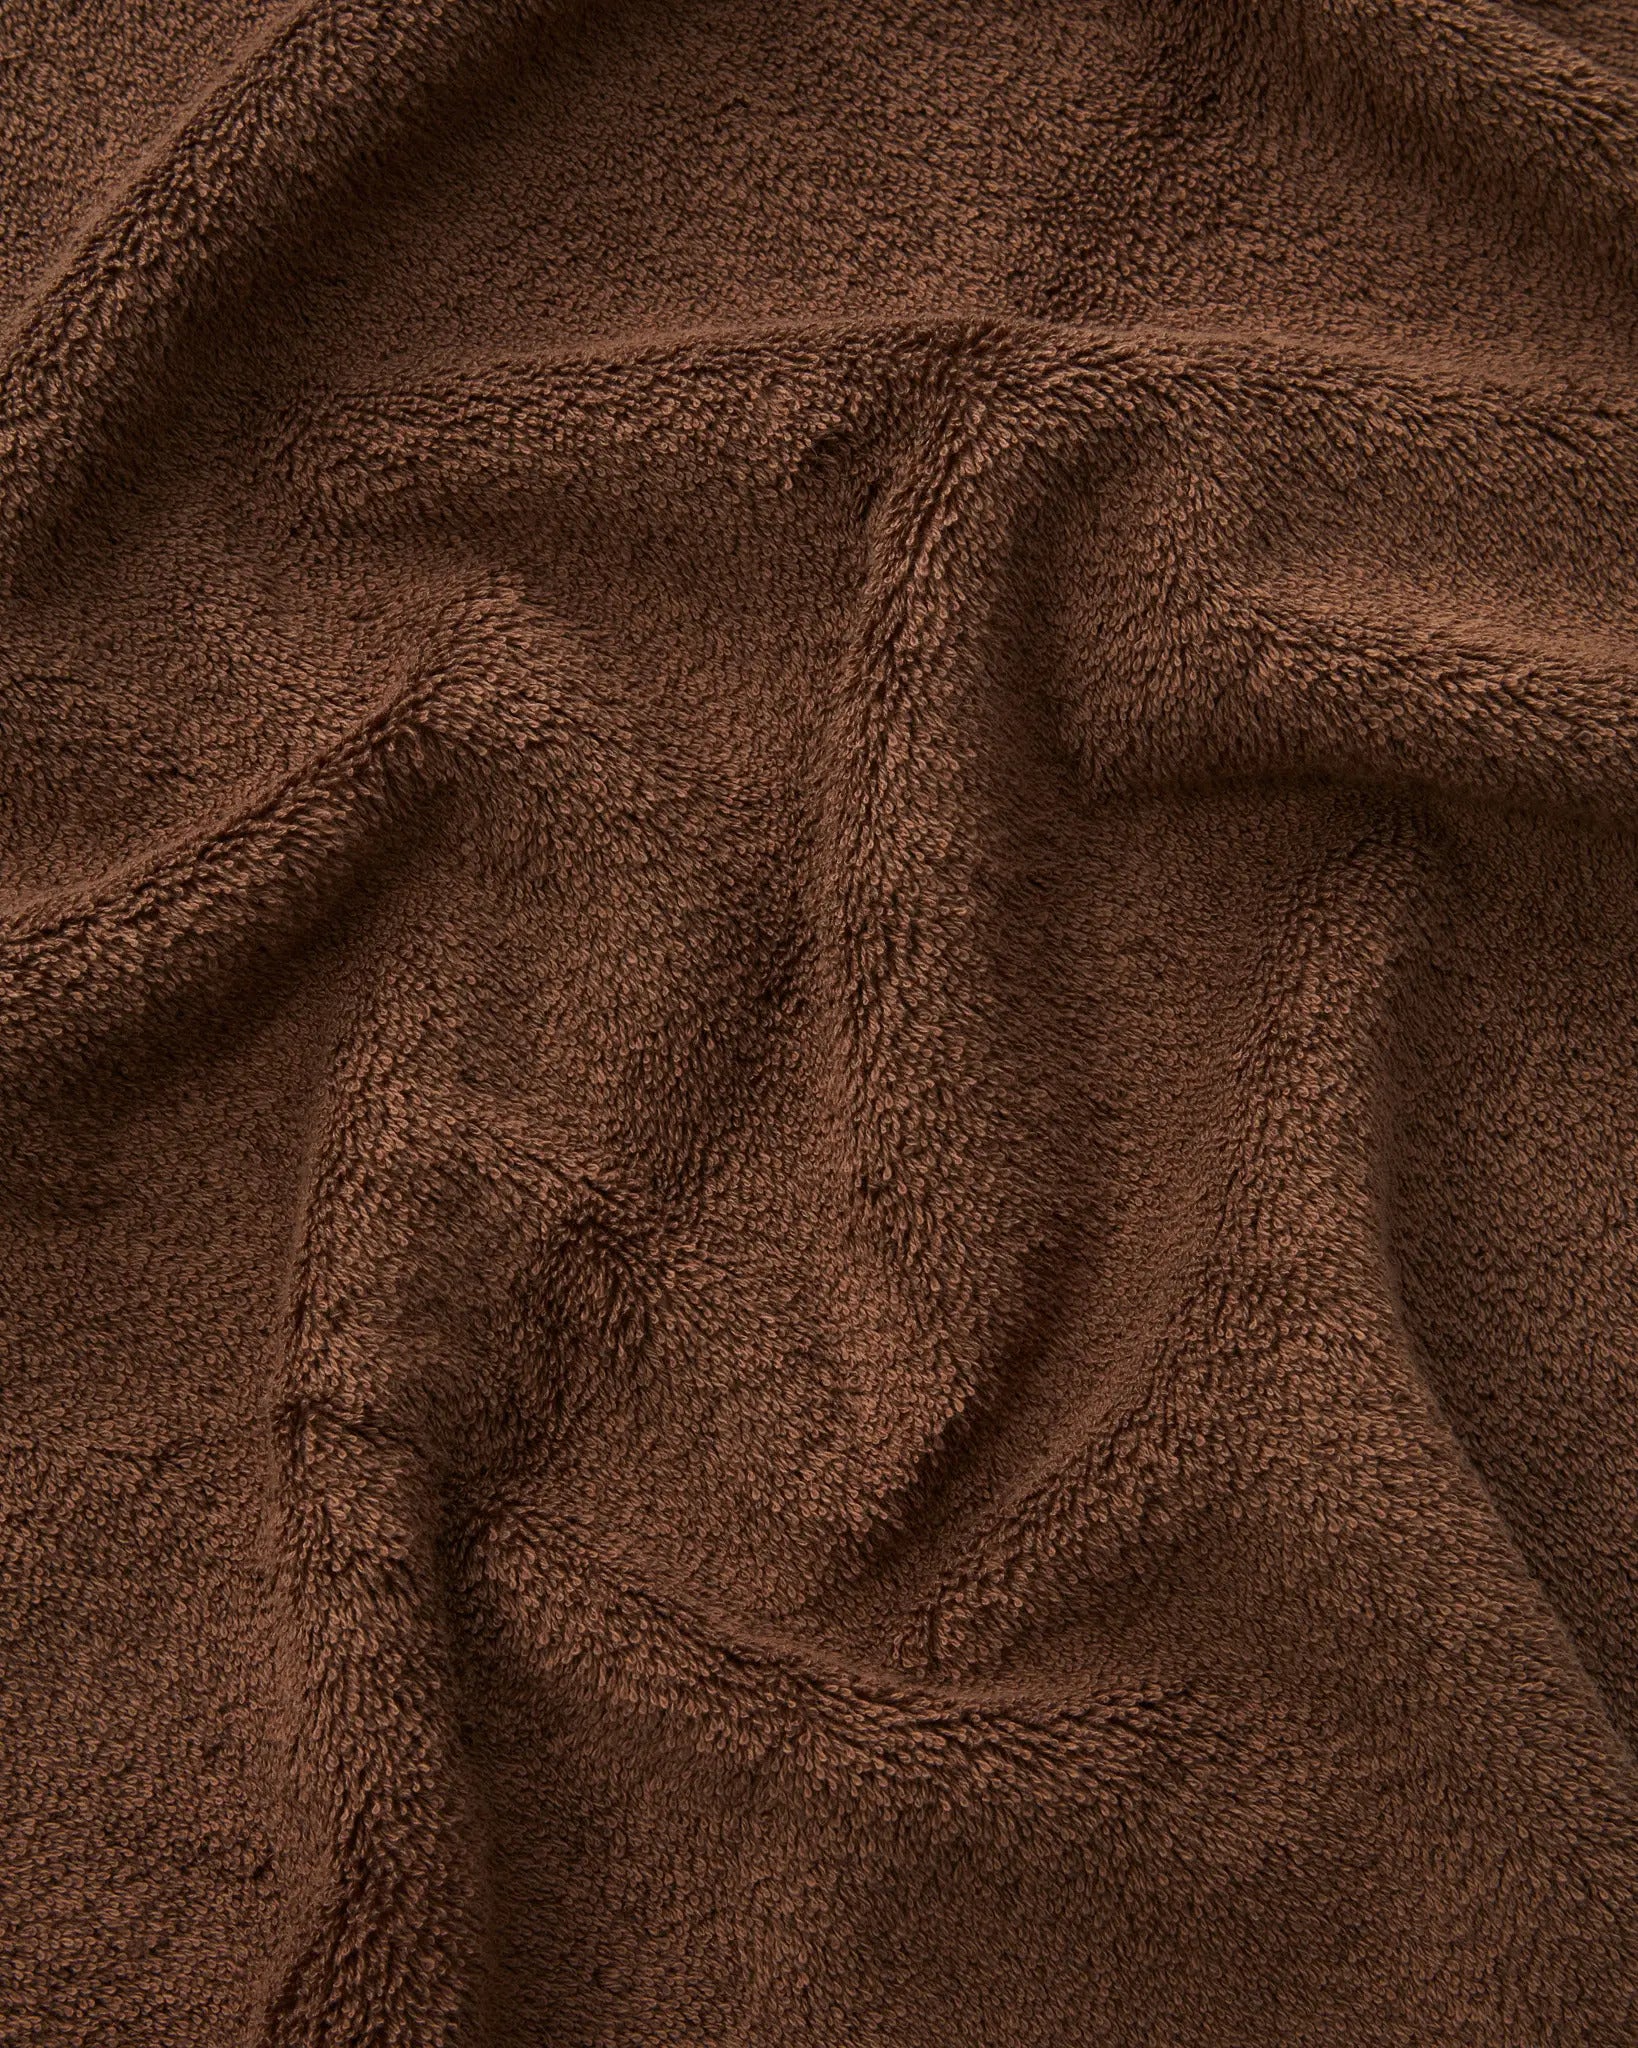 Organic Cotton Towels - Kodiak Brown